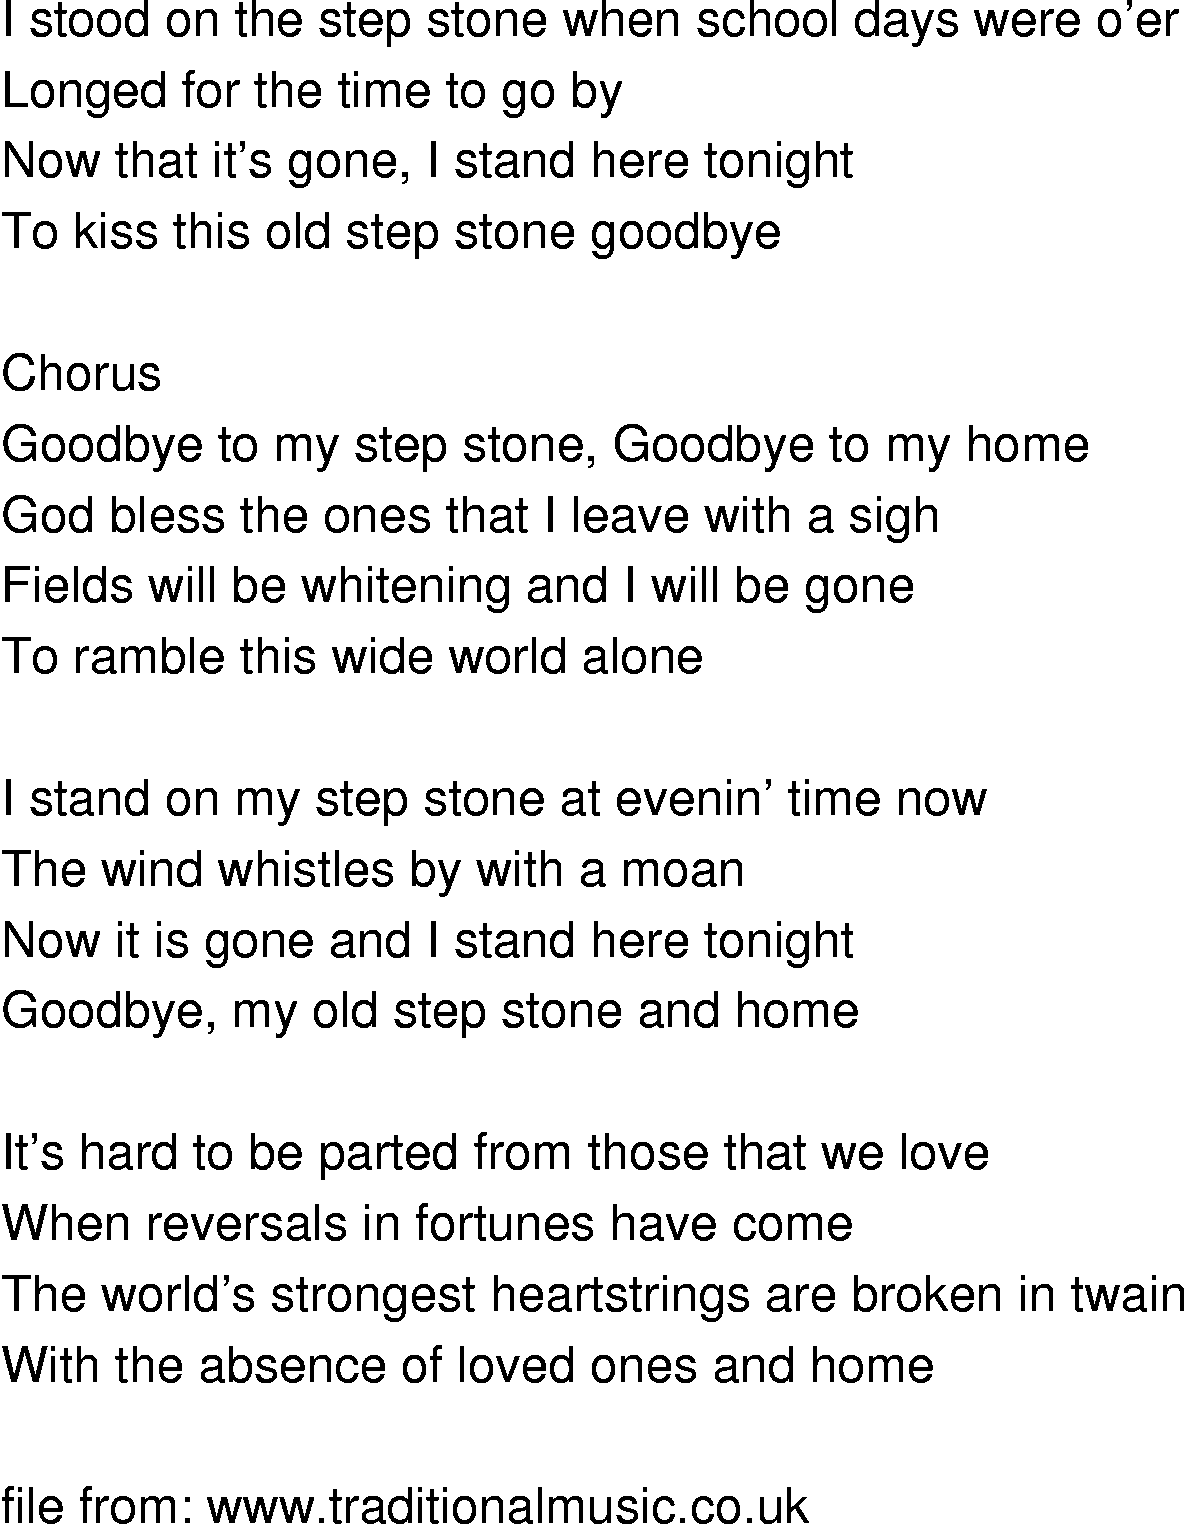 Old-Time (oldtimey) Song Lyrics - stepstone